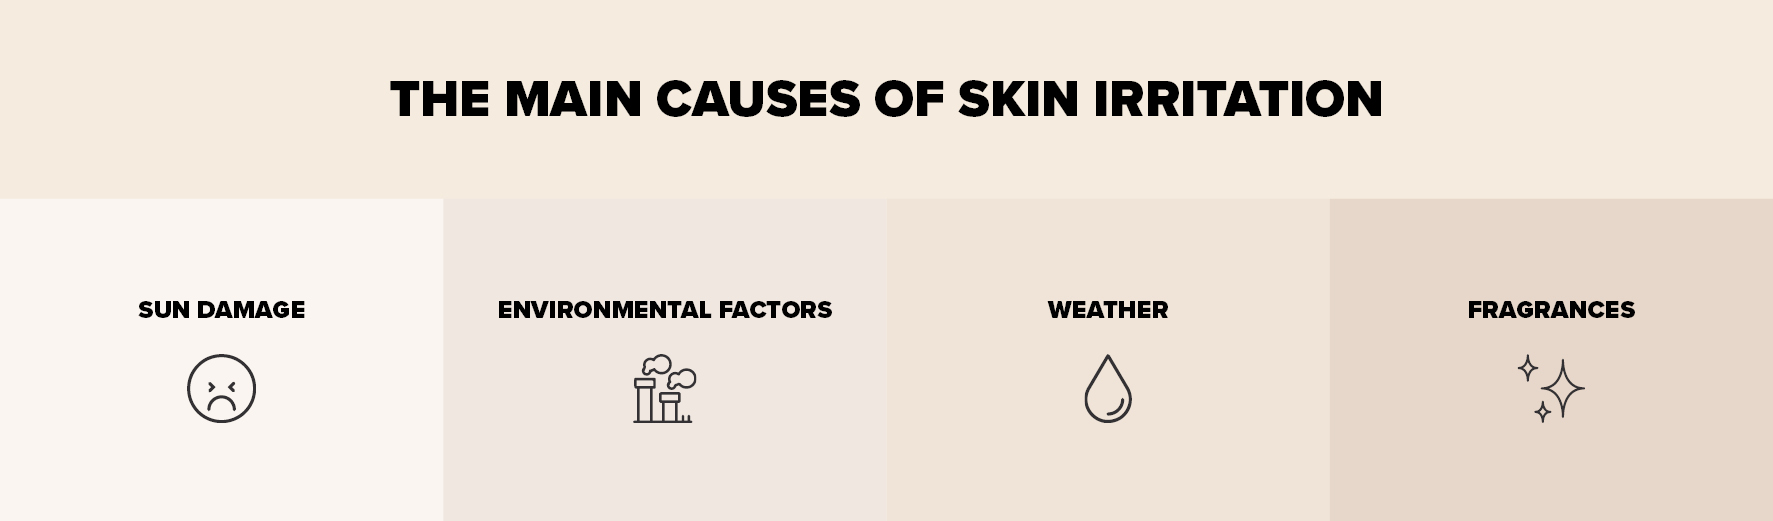 Skin irritants